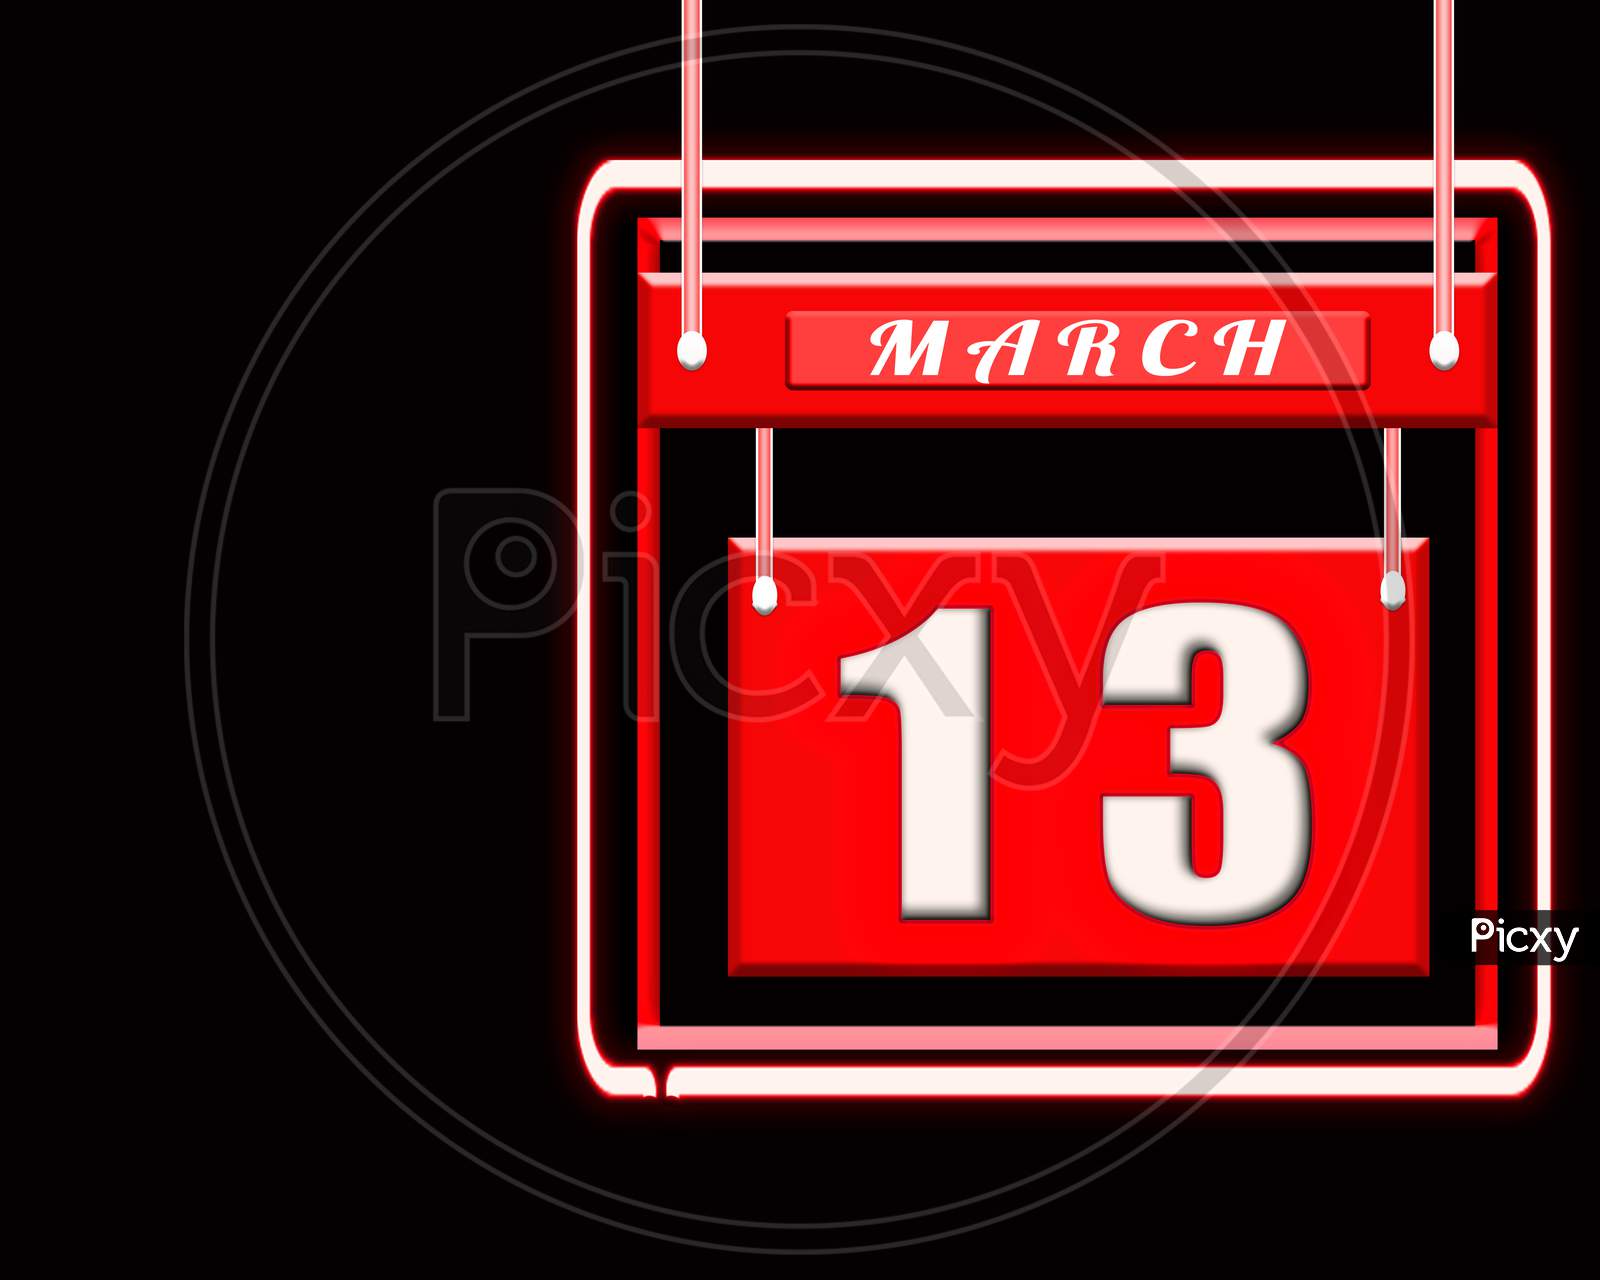 13 March, Red Calendar On Black Backgrand